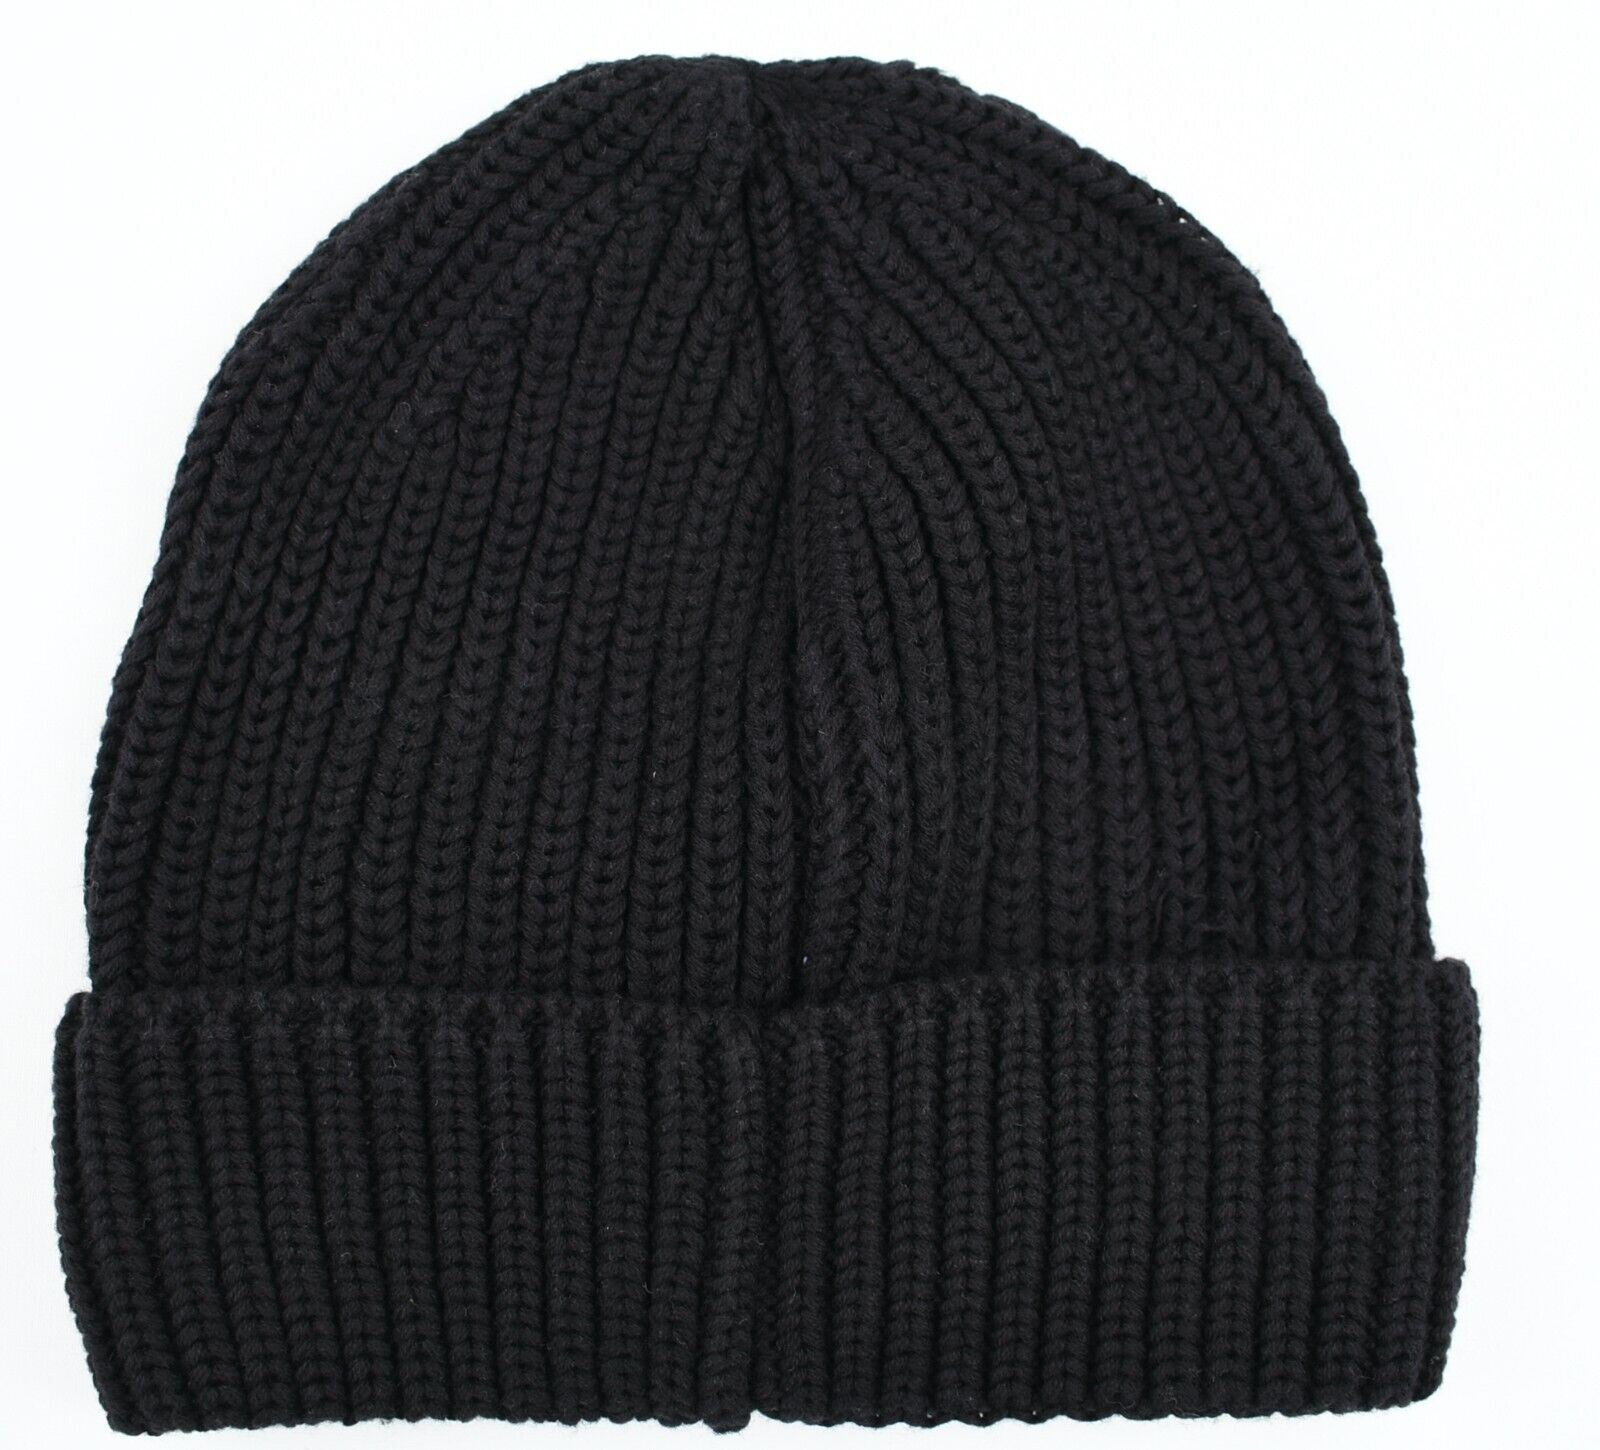 TOMMY HILFIGER JEANS Men's Beanie Hat, 100% Organic Cotton Knit, Black, One Size